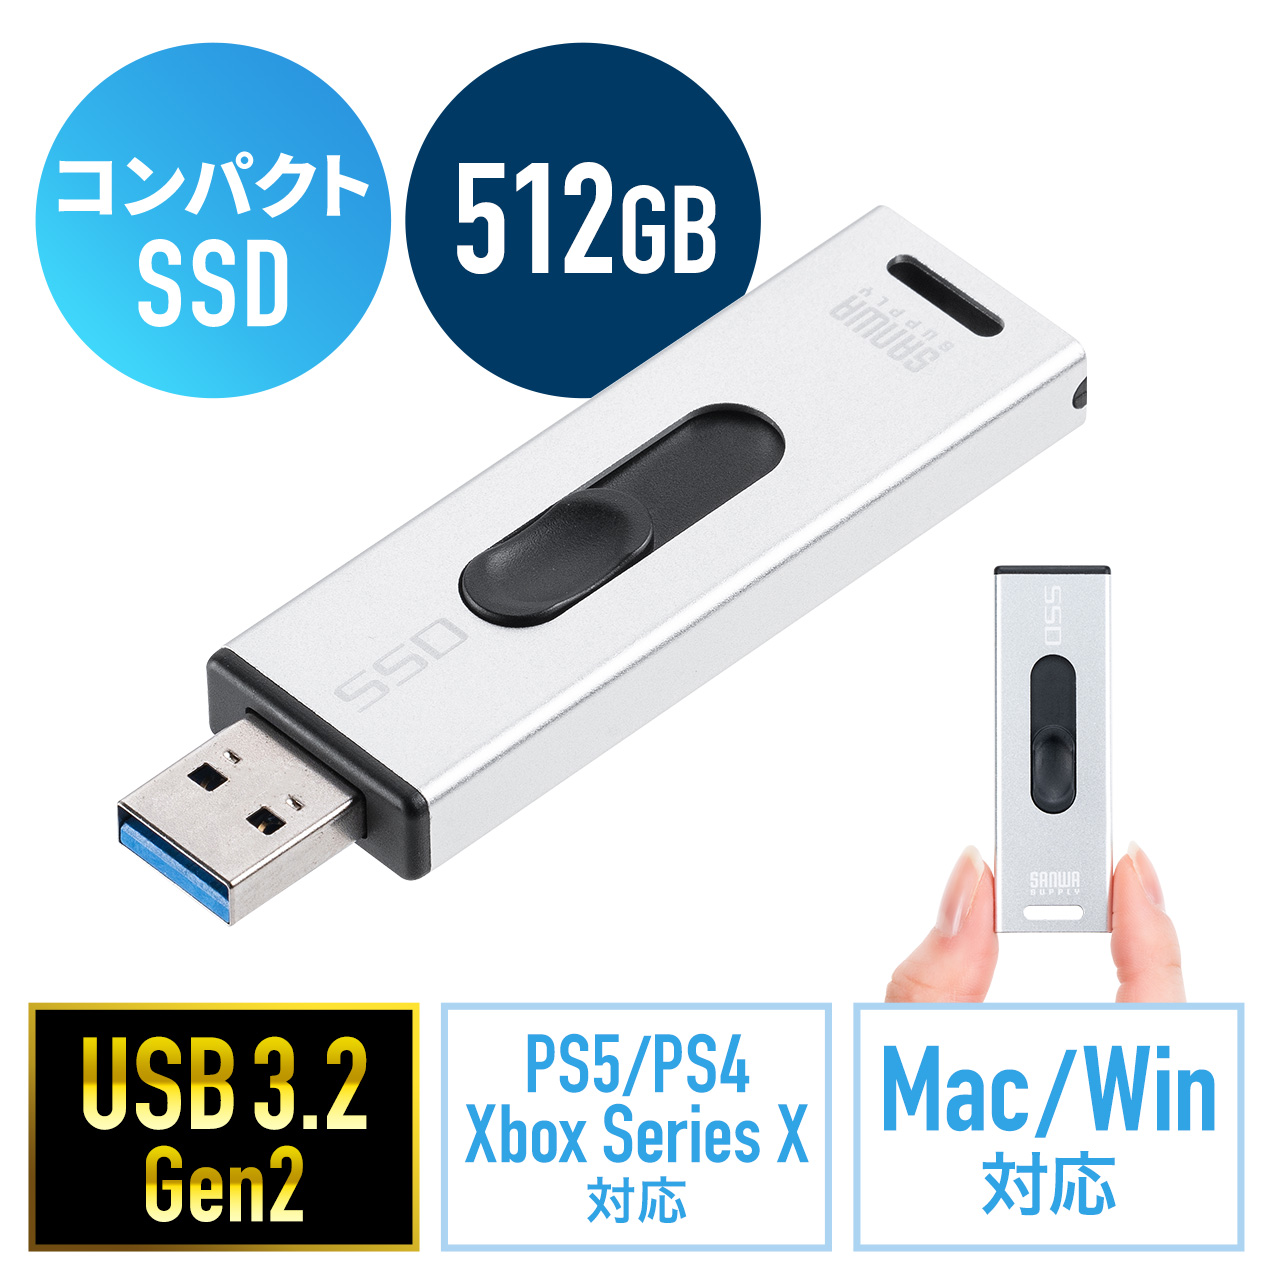 yZ[zXeBbN^SSD Ot USB3.2 Gen2 ^ 512GB er^ Q[@ PS5/PS4/Xbox Series X XCh } Vo[ 600-USSD512GS